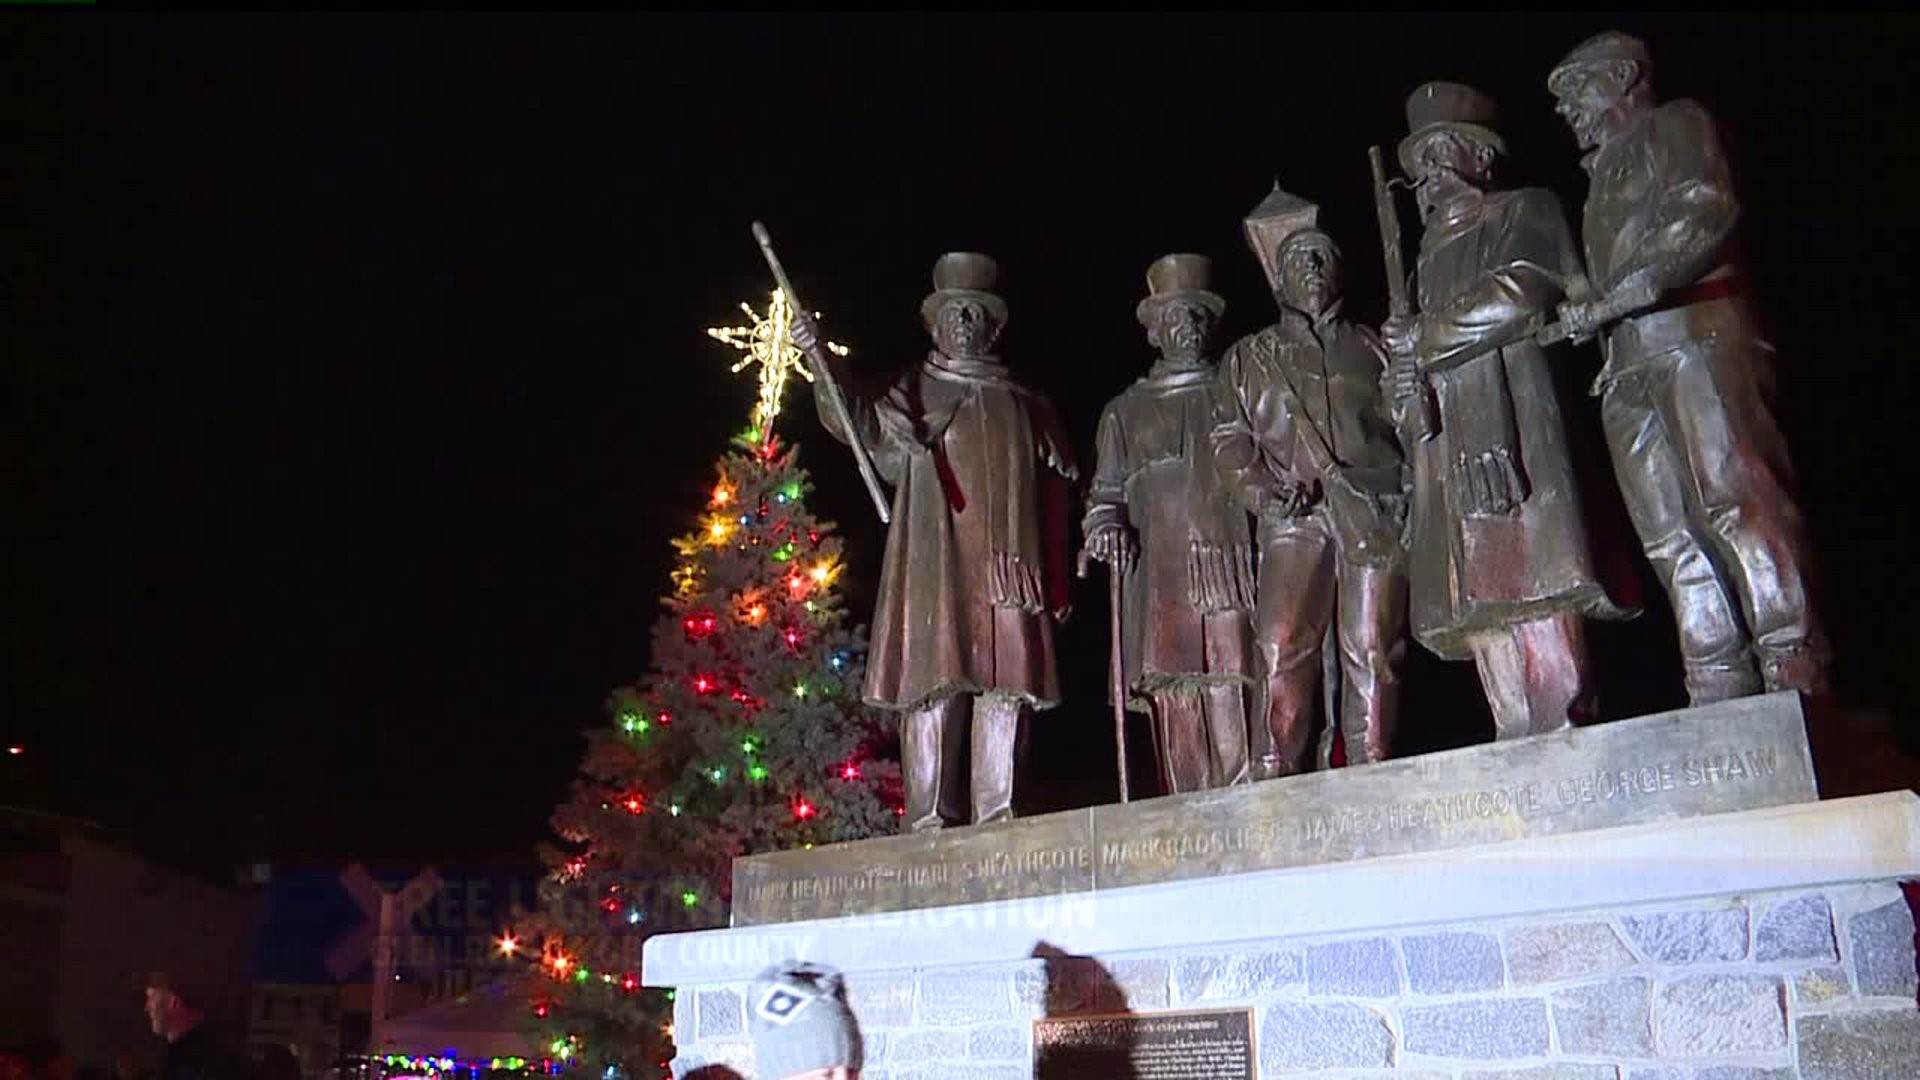 40th annual lighting of the Glen Rock Christmas tree